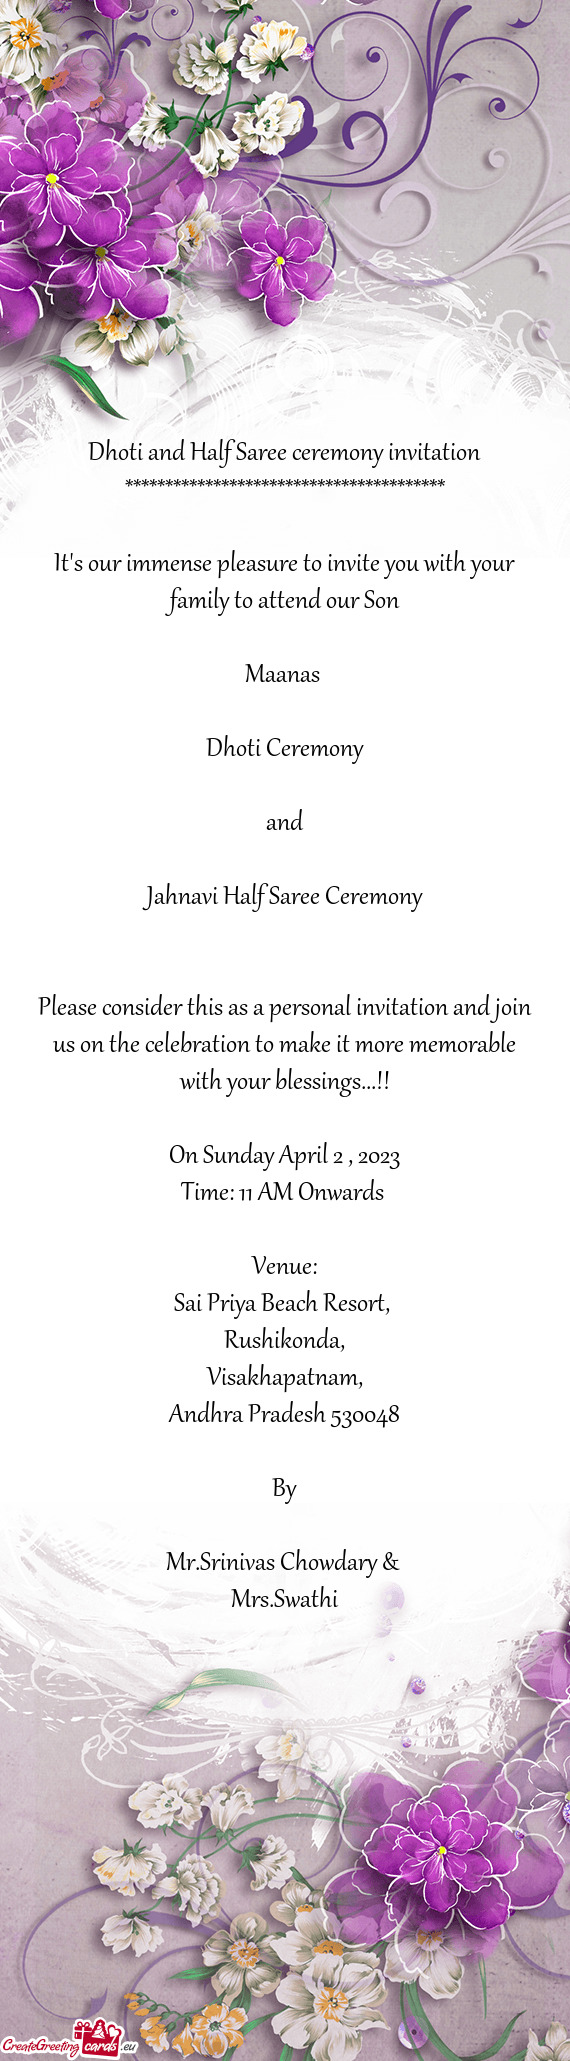 Jahnavi Half Saree Ceremony